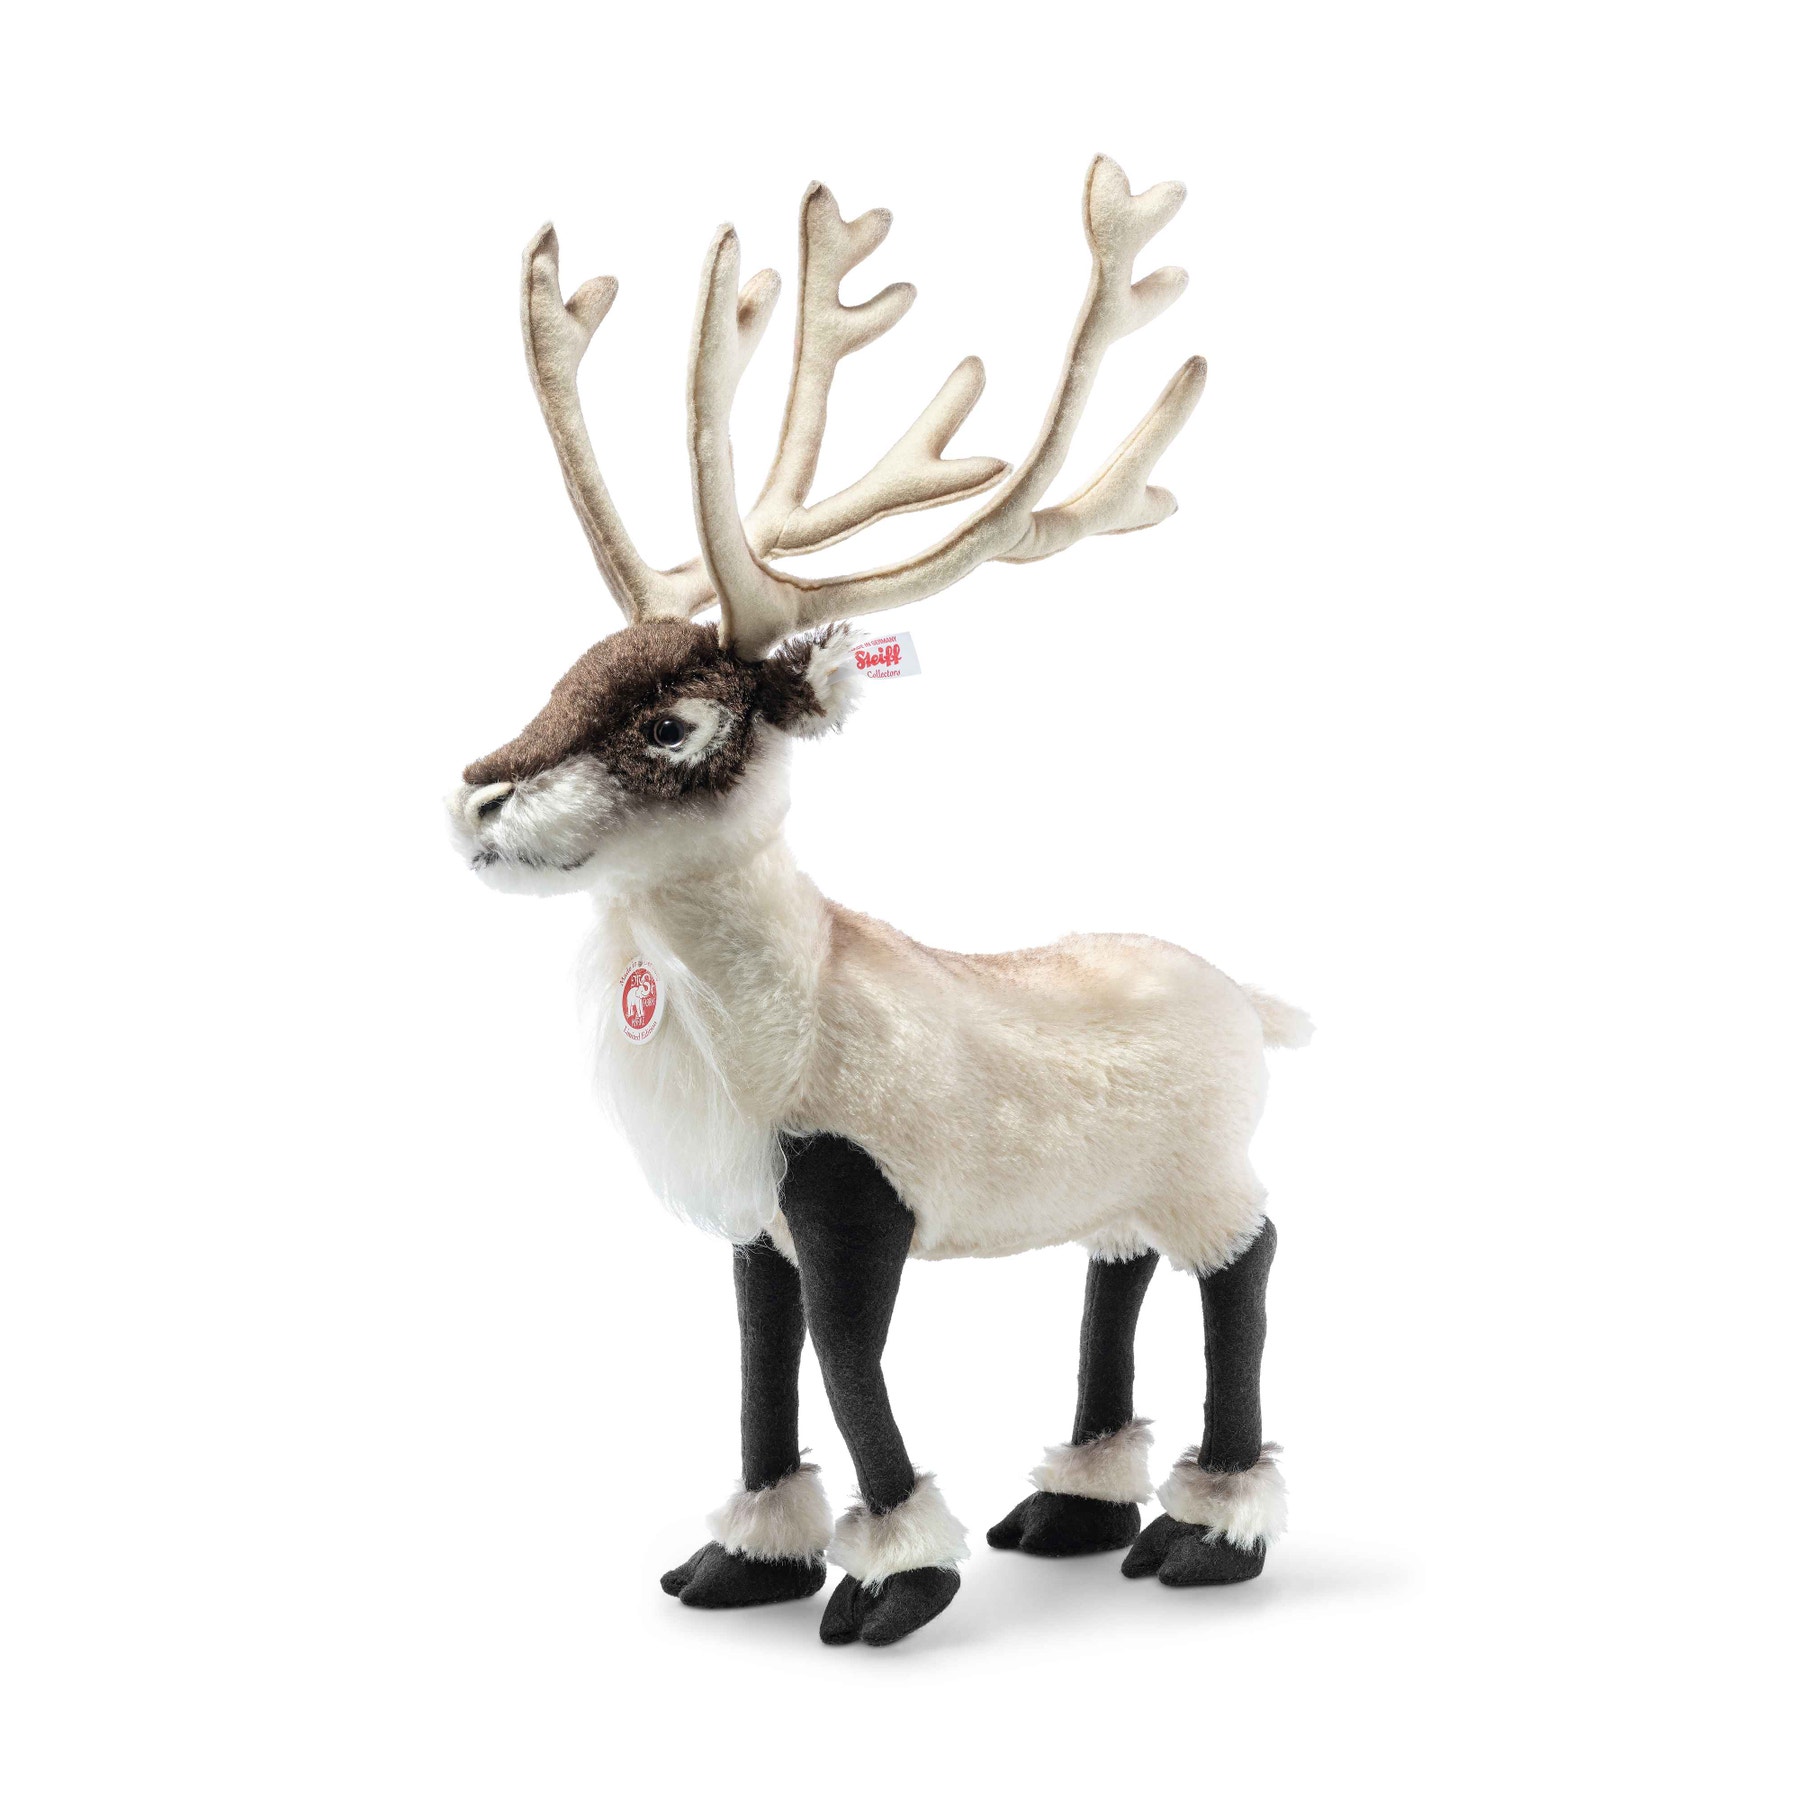 Erik reindeer